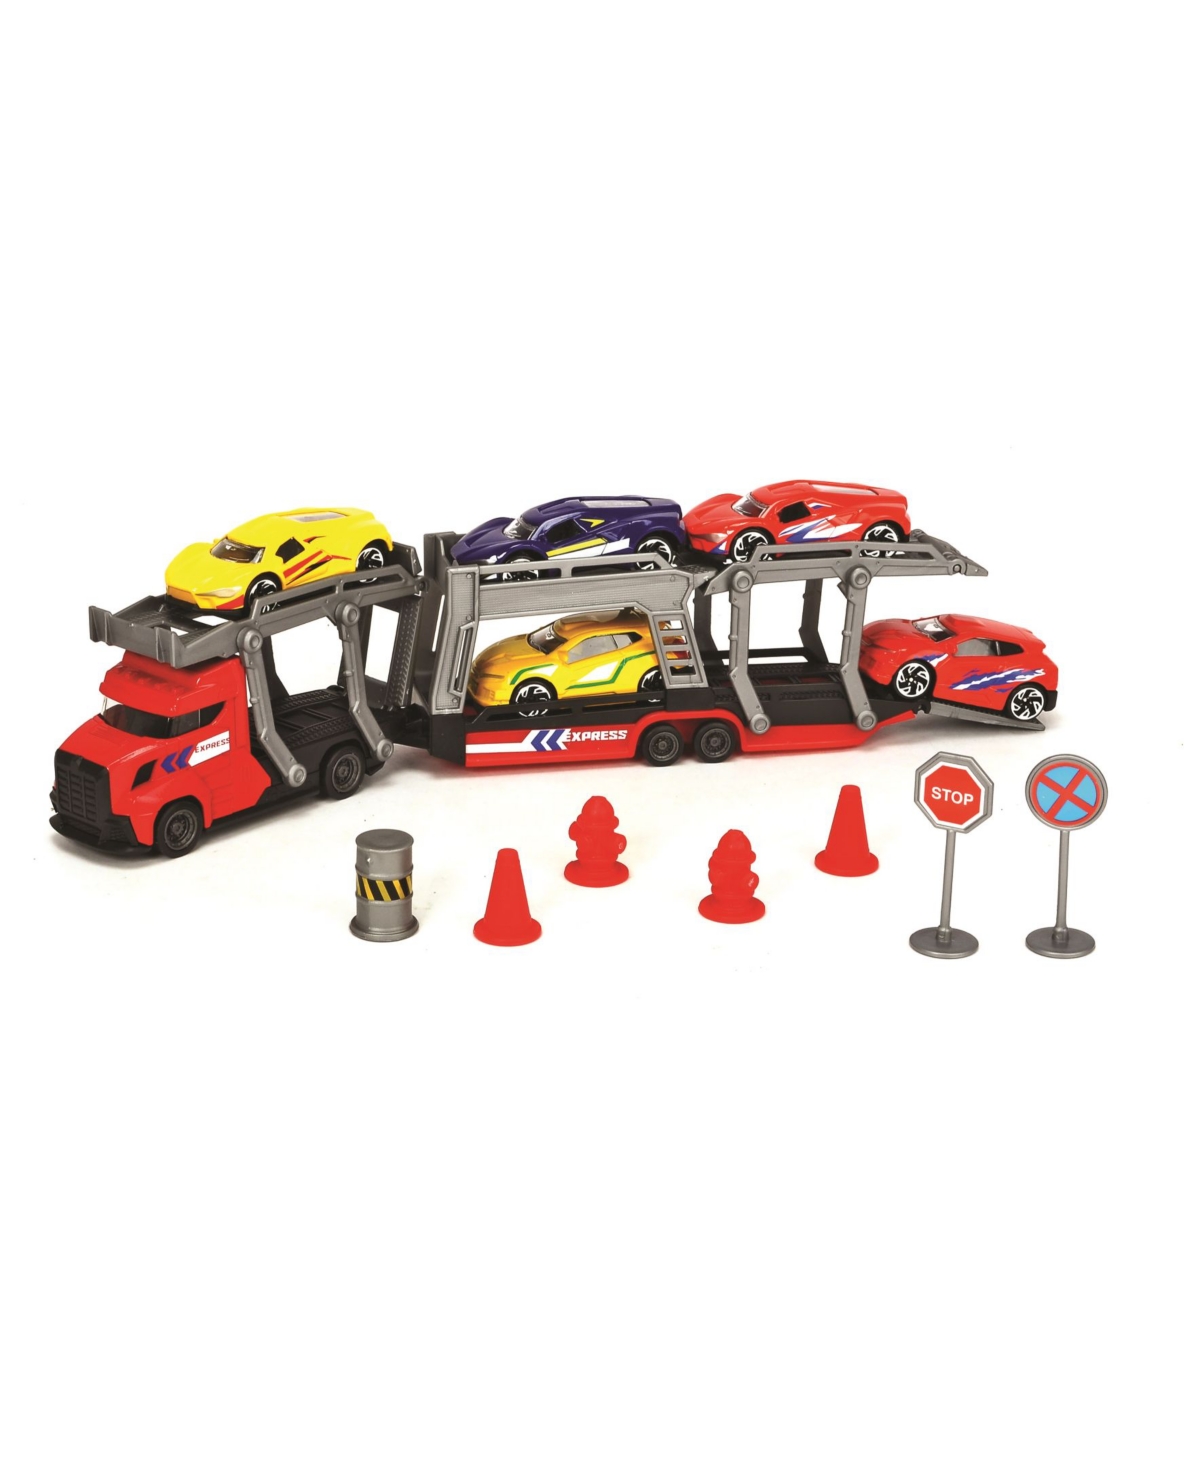 Dickie Toys Hk Ltd Dickie Toys Transporter Set With 5 Die-cast Cars In Multi